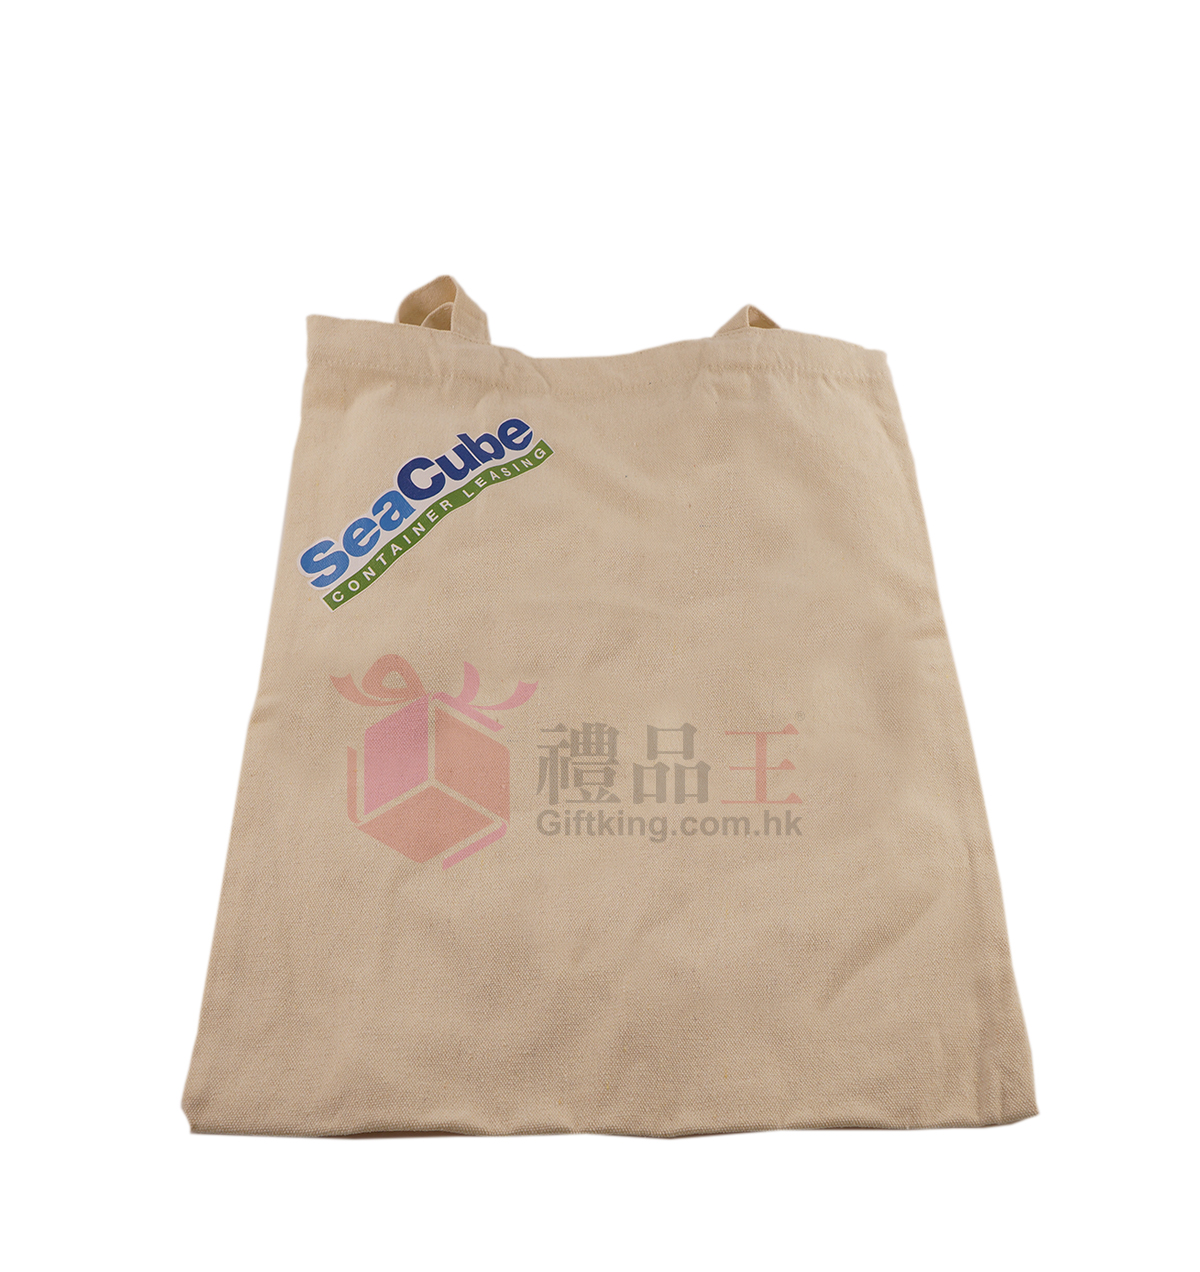 SeaCube 帆布环保购物袋 (广告礼品)